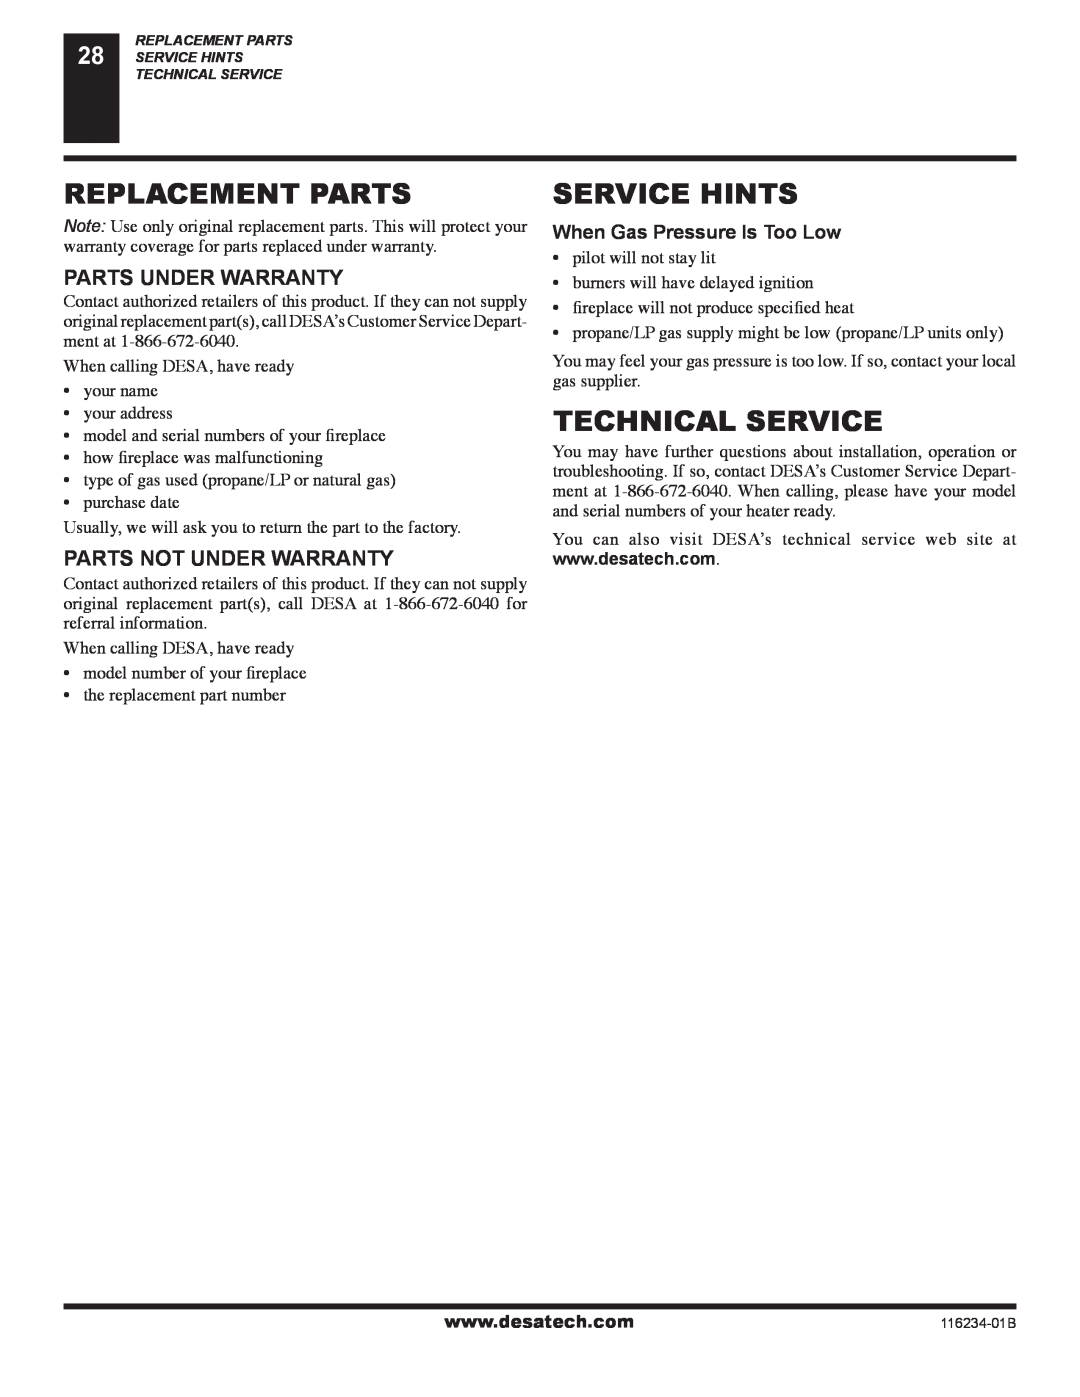 Desa (V)TC36PE Replacement Parts, Service Hints, Technical Service, Parts Under Warranty, Parts Not Under Warranty 